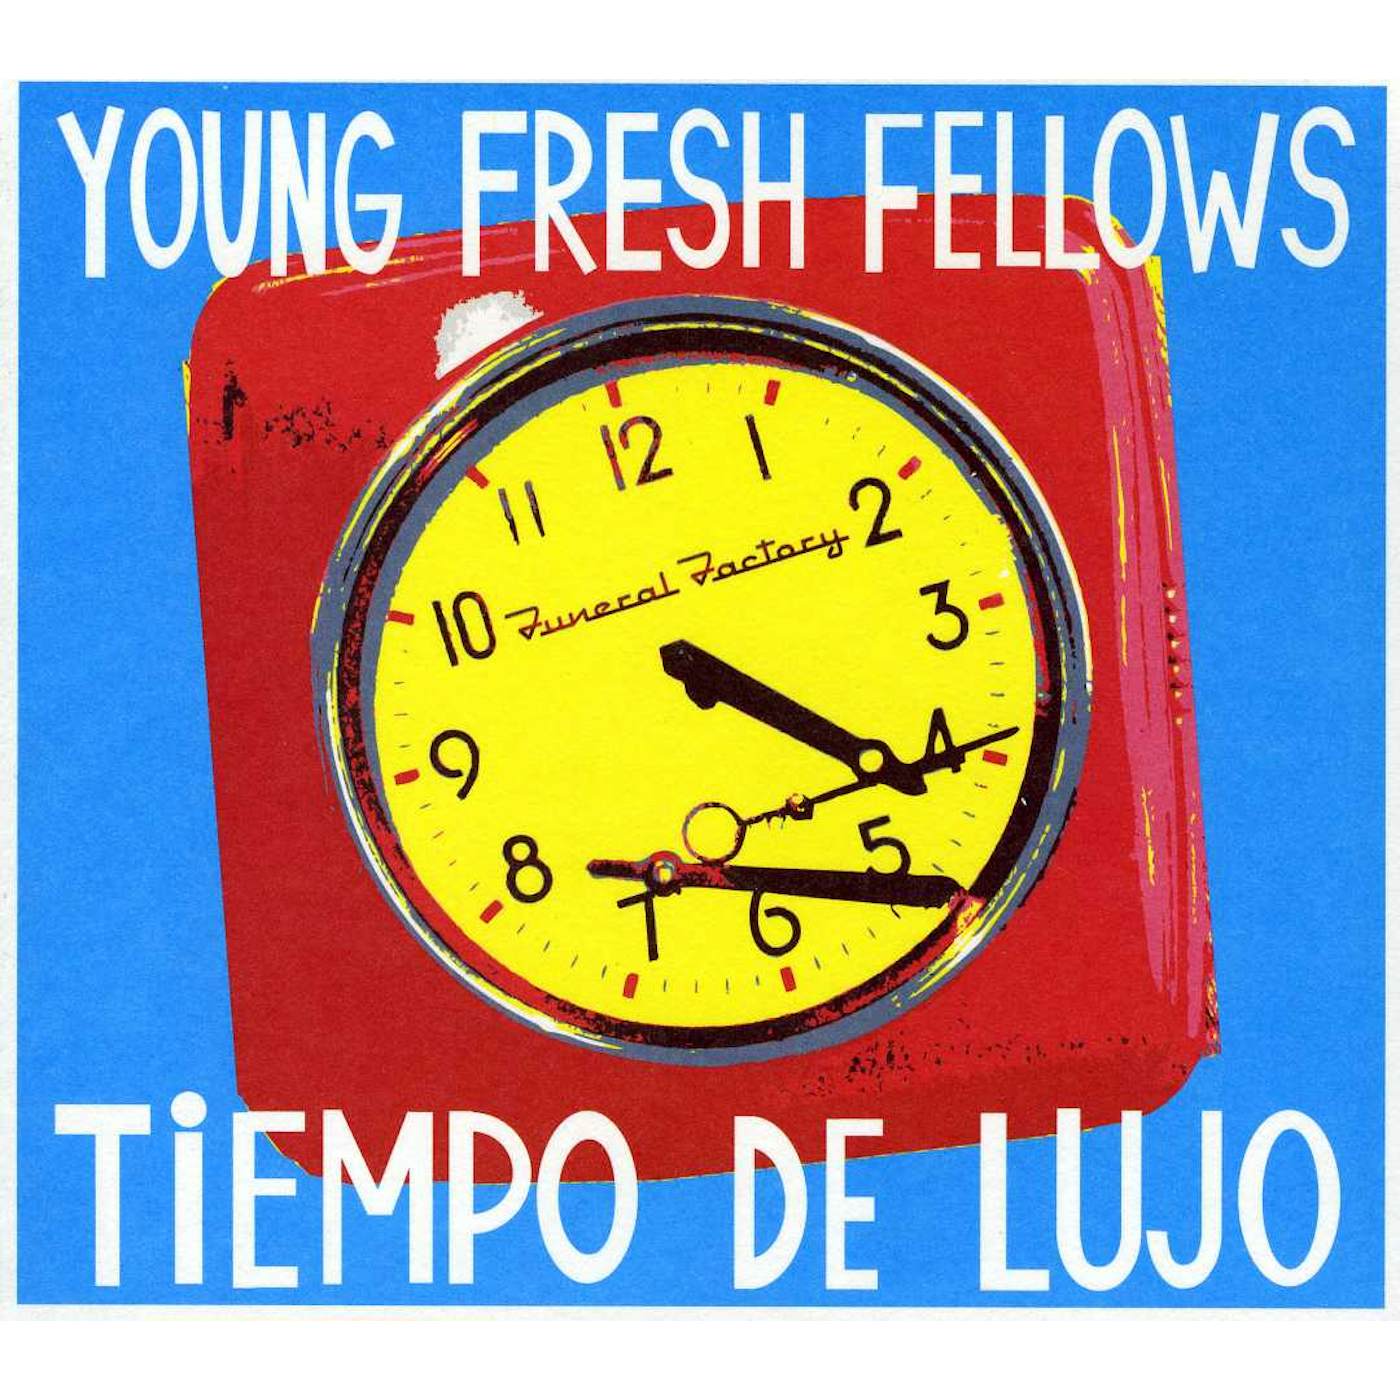 The Young Fresh Fellows TIEMPO DE LUJO CD